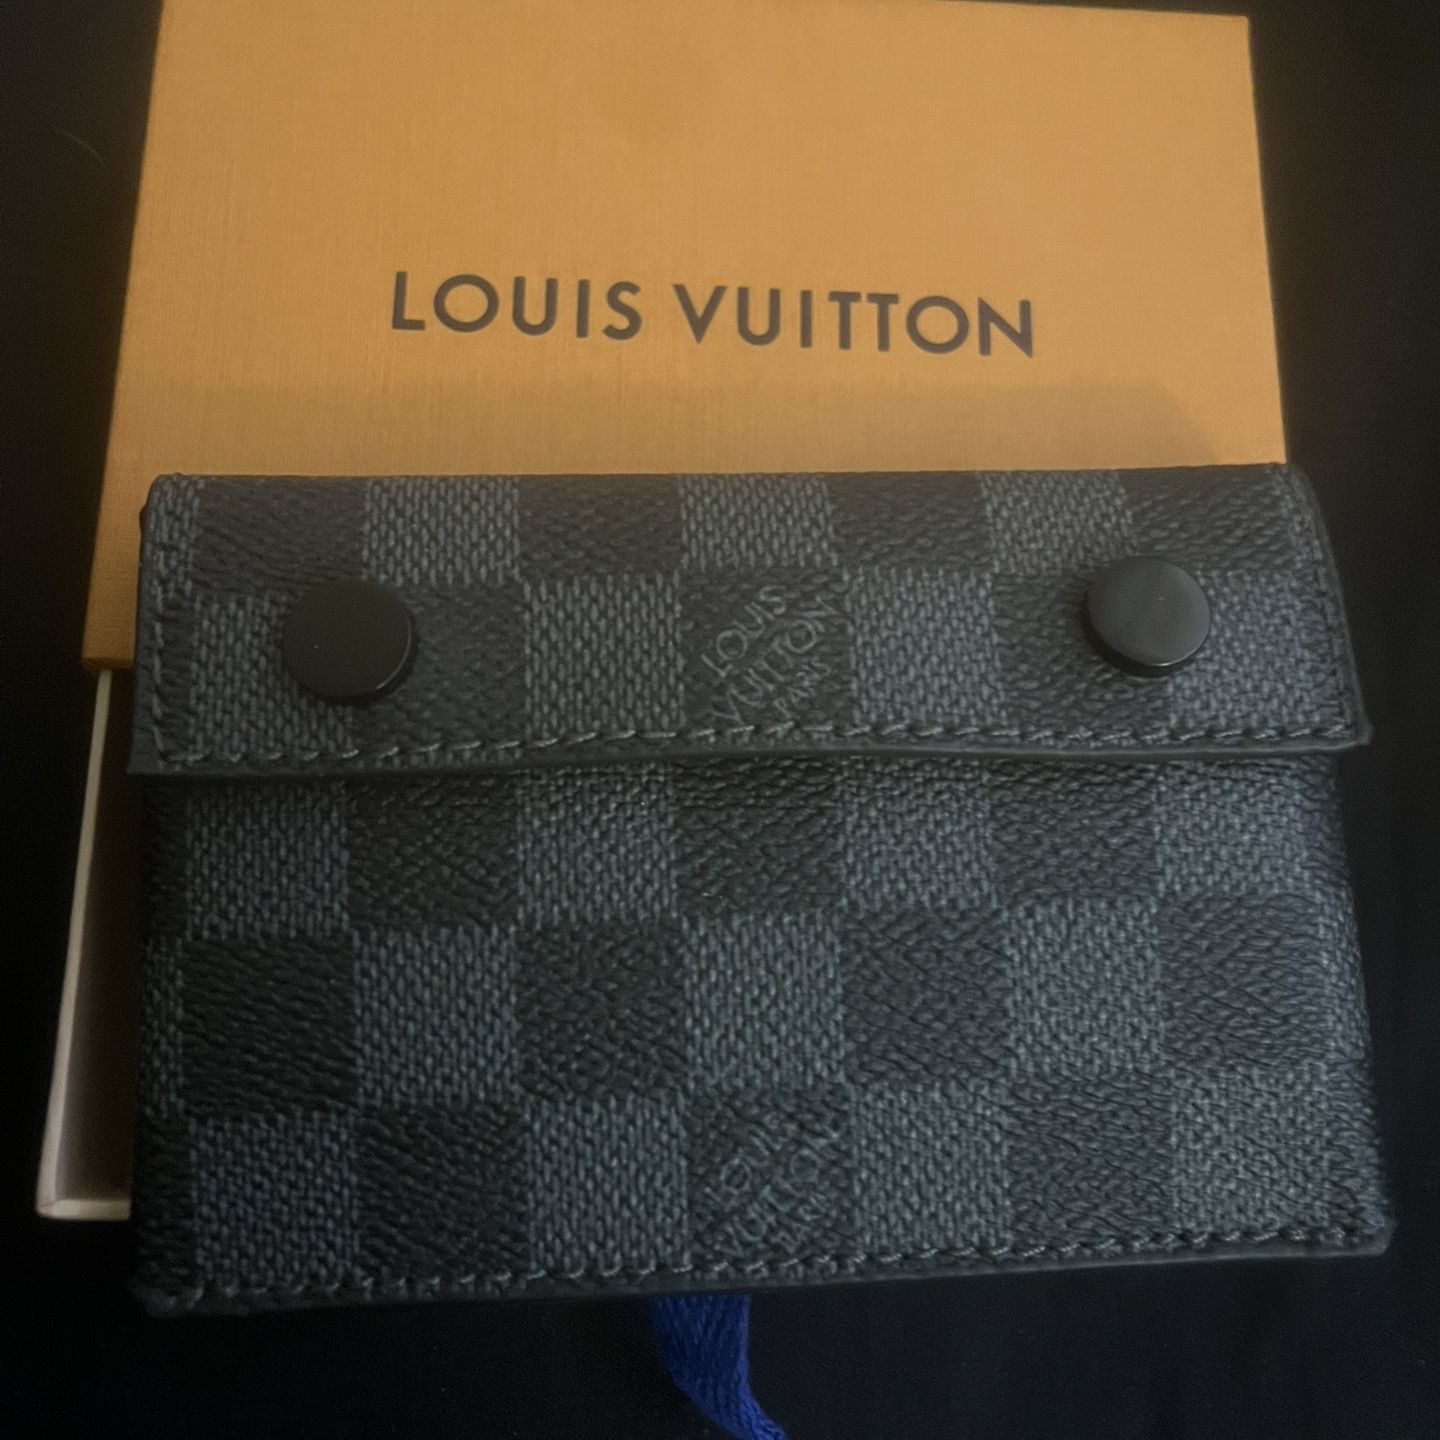 Authentic Louis Vuitton Bags for Sale in Glendale, AZ - OfferUp